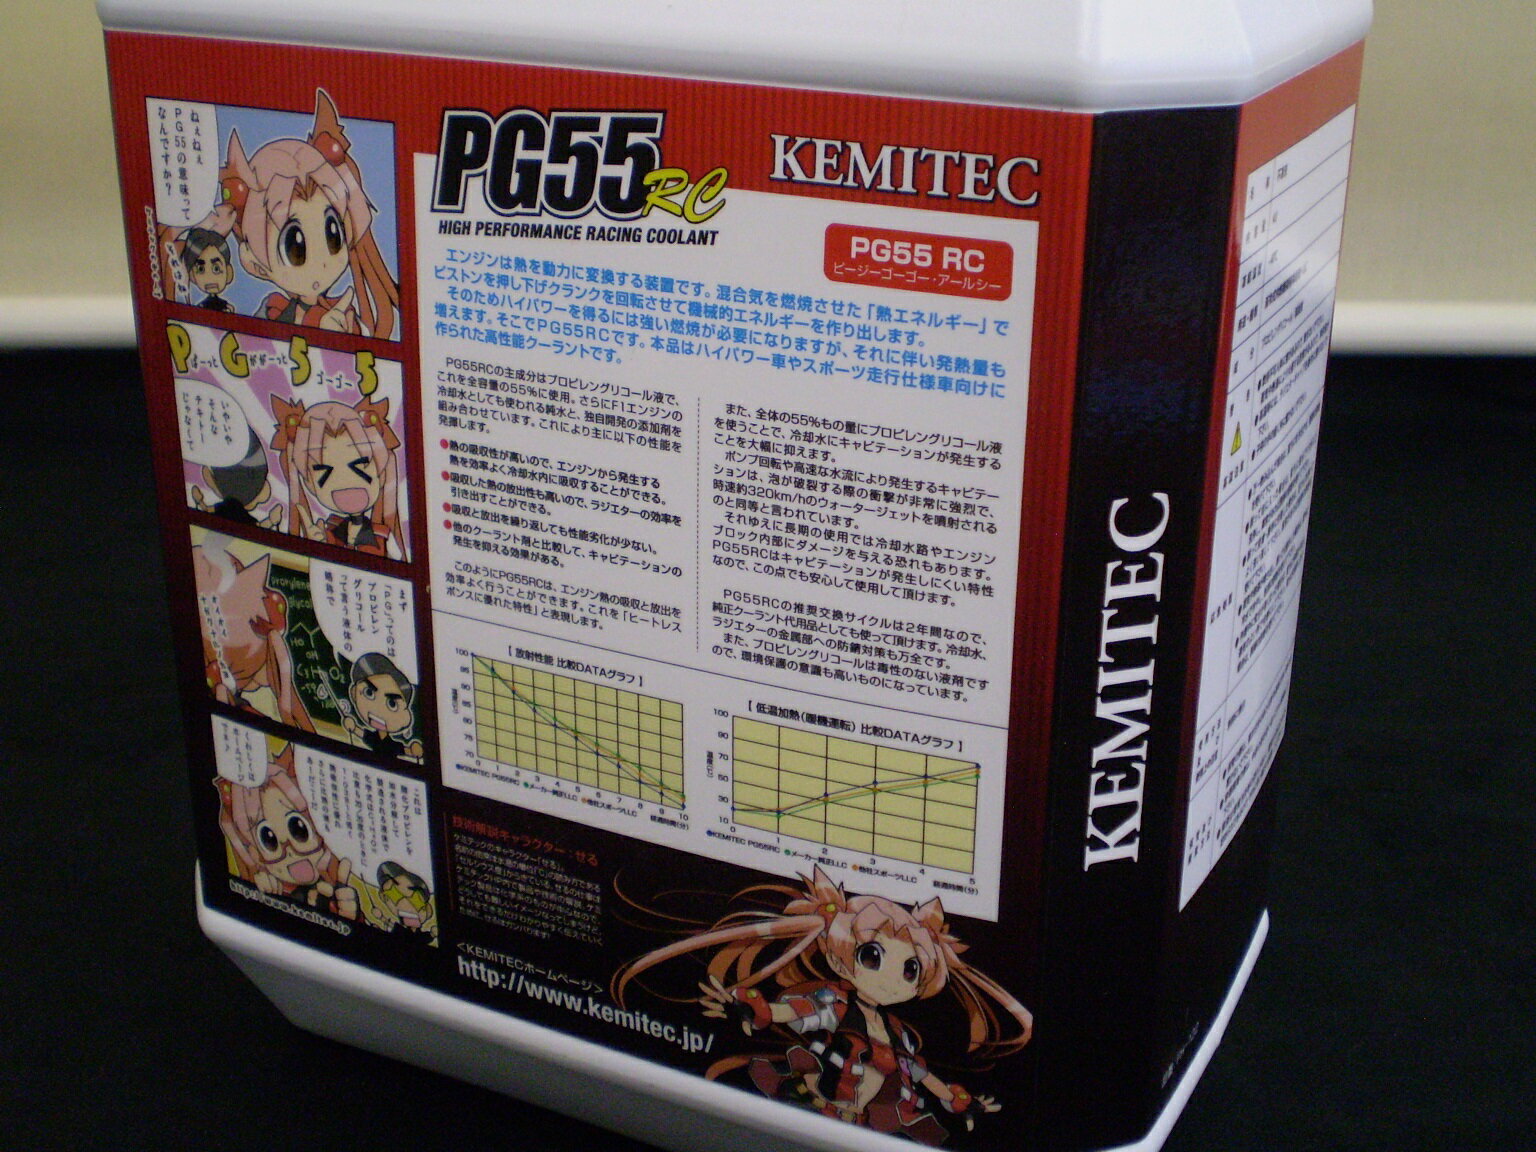 KEMITEC　ケミテック 高性能レーシング クーラントPG55 RC 【 2L 】 FH111【HIGH PERFORMANCE RACING COOLANT】 2